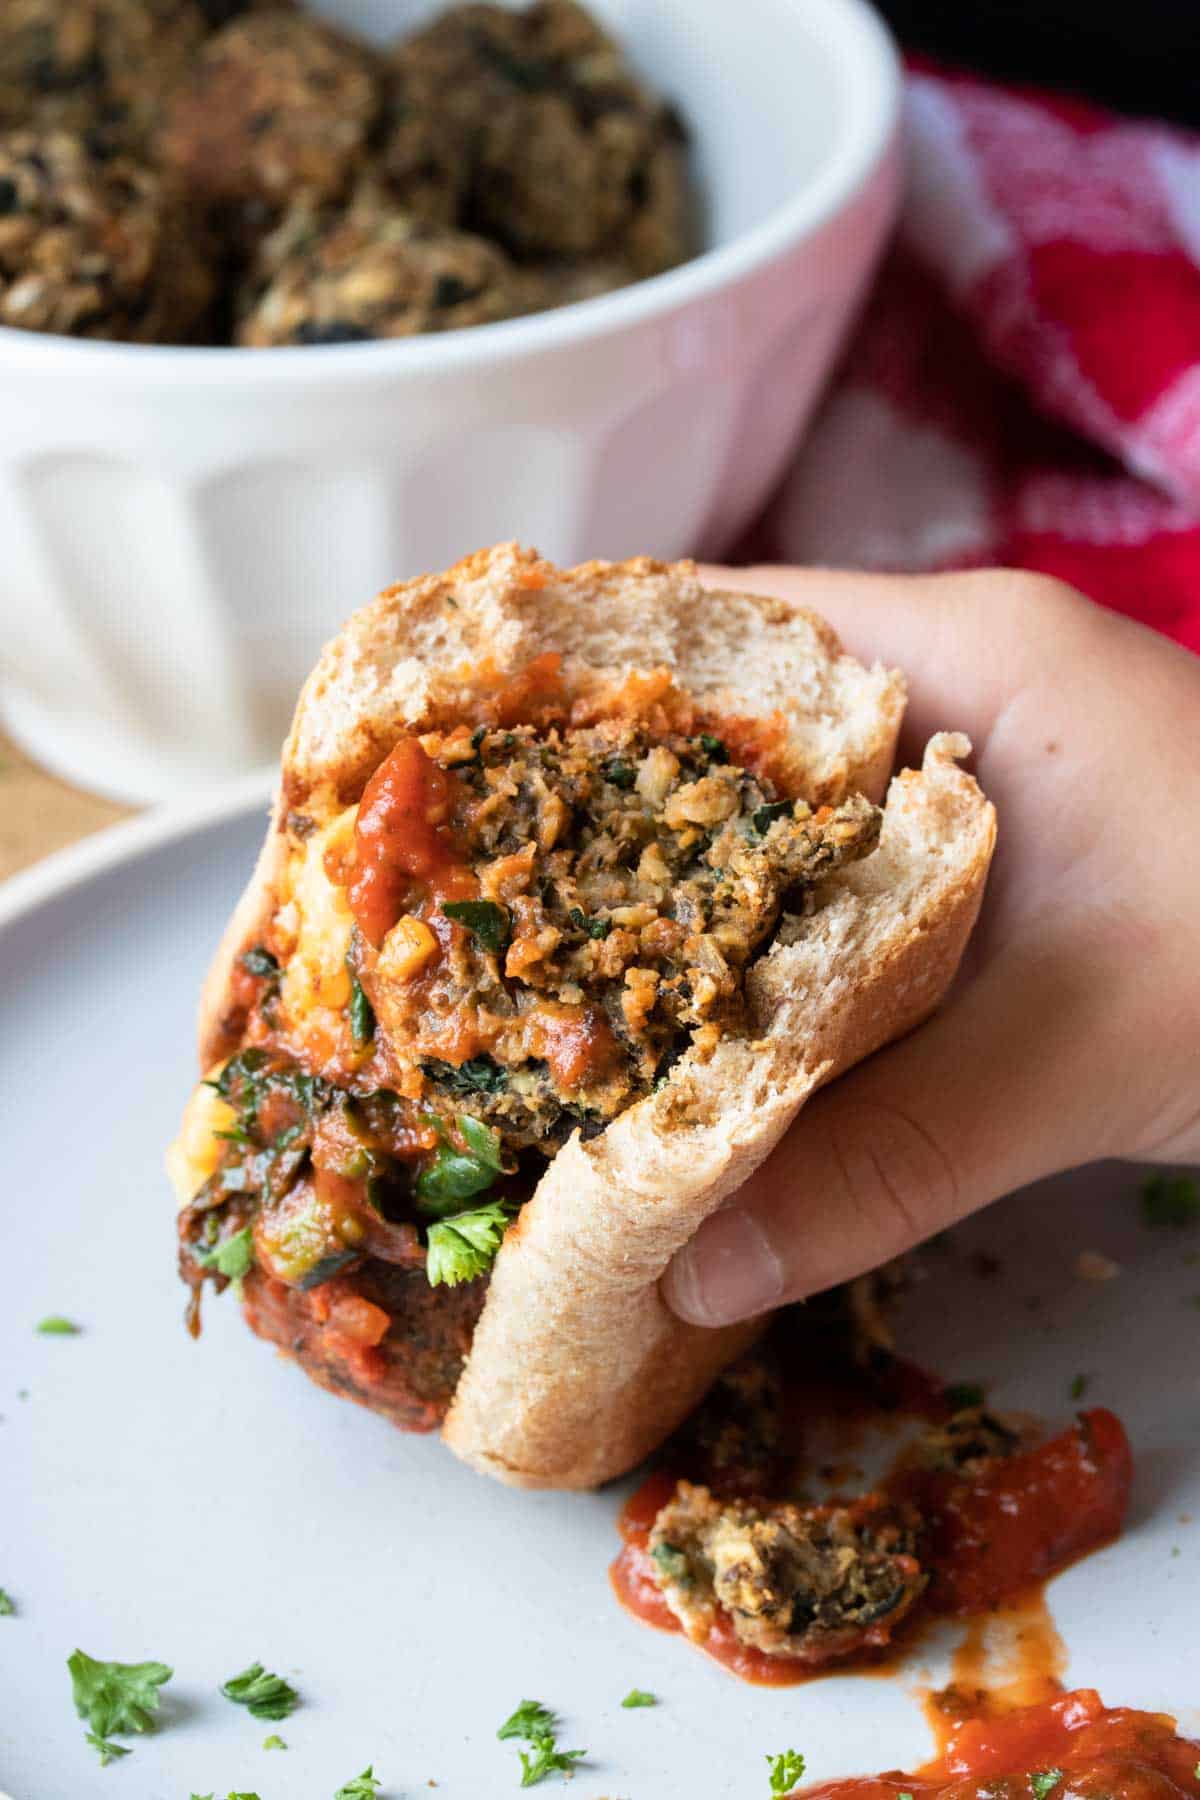 Hand holding a half eaten vegan meatball sub sandwich.